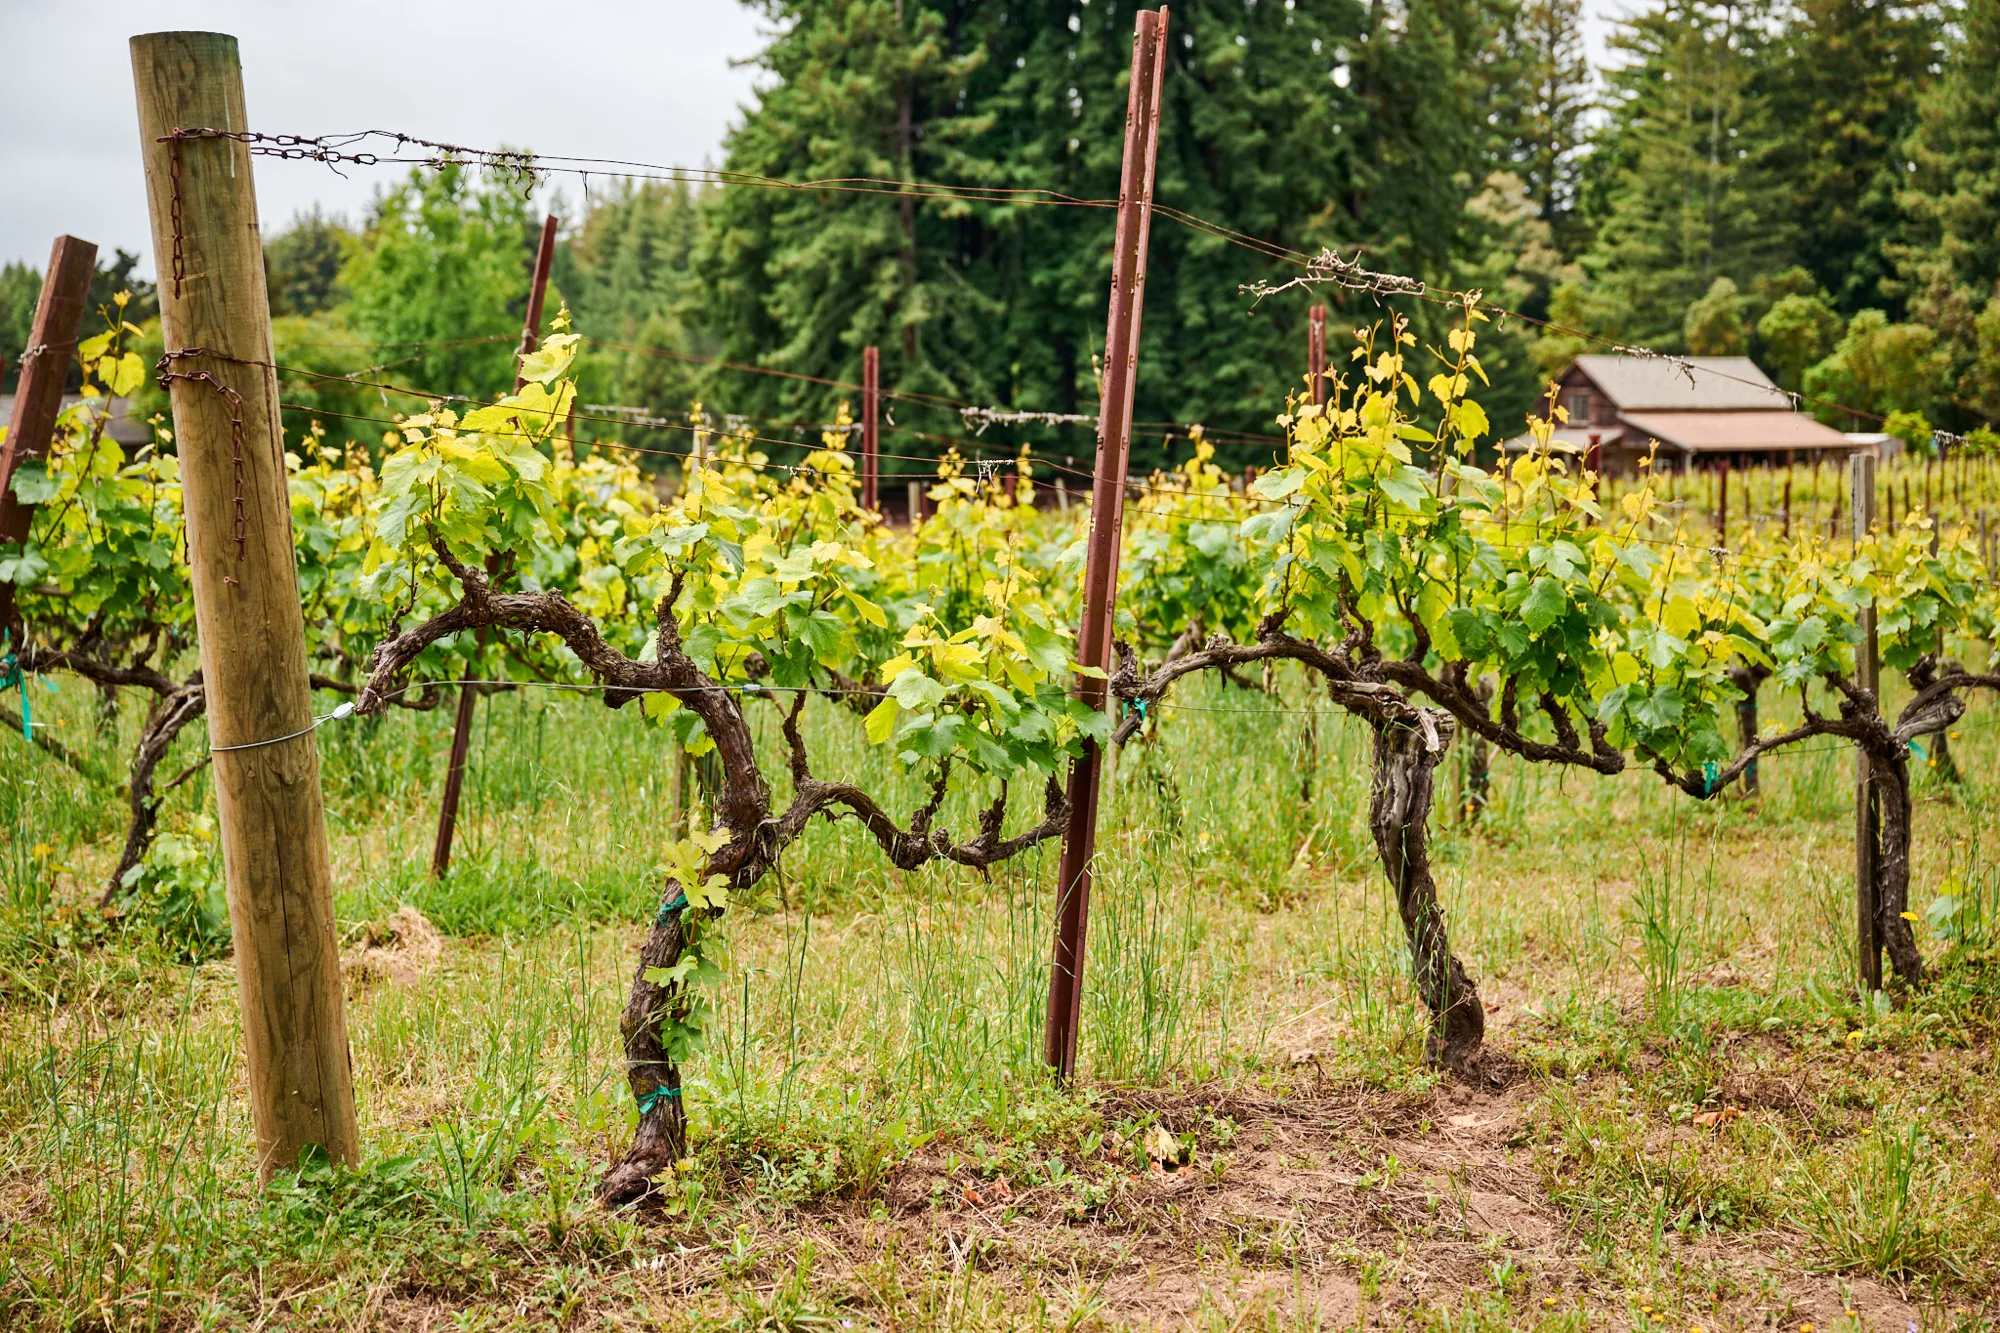 Mature grapevines in the Sandar & Hem vineyard